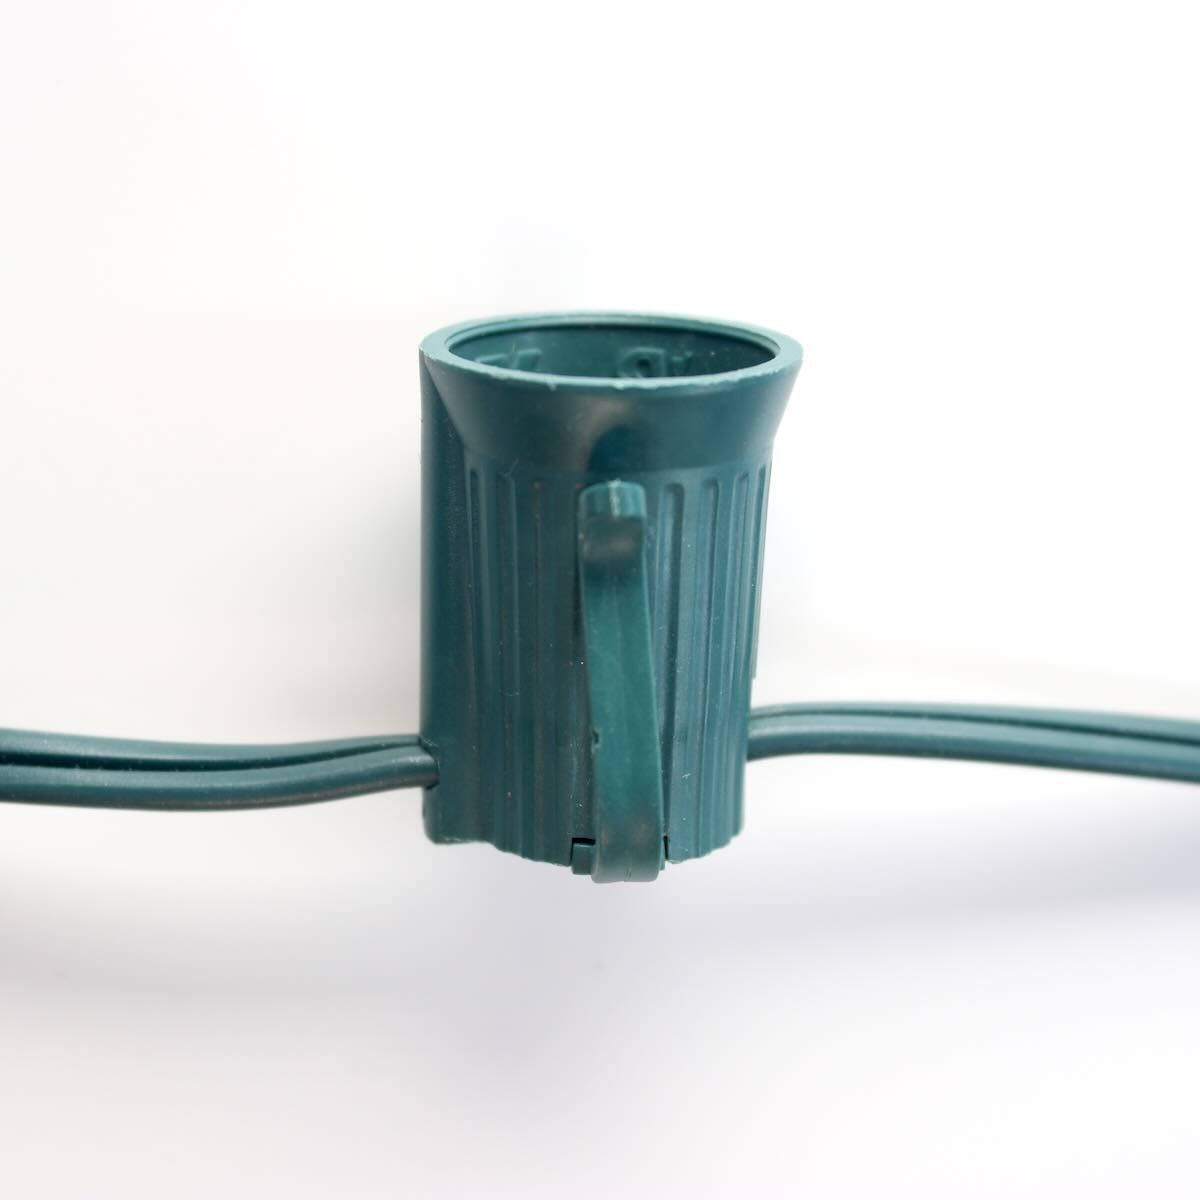 Seasonal Source - C9-1000-12-G - C9 Light Spool, 1000' Length, 12 Spacing, Green Wire